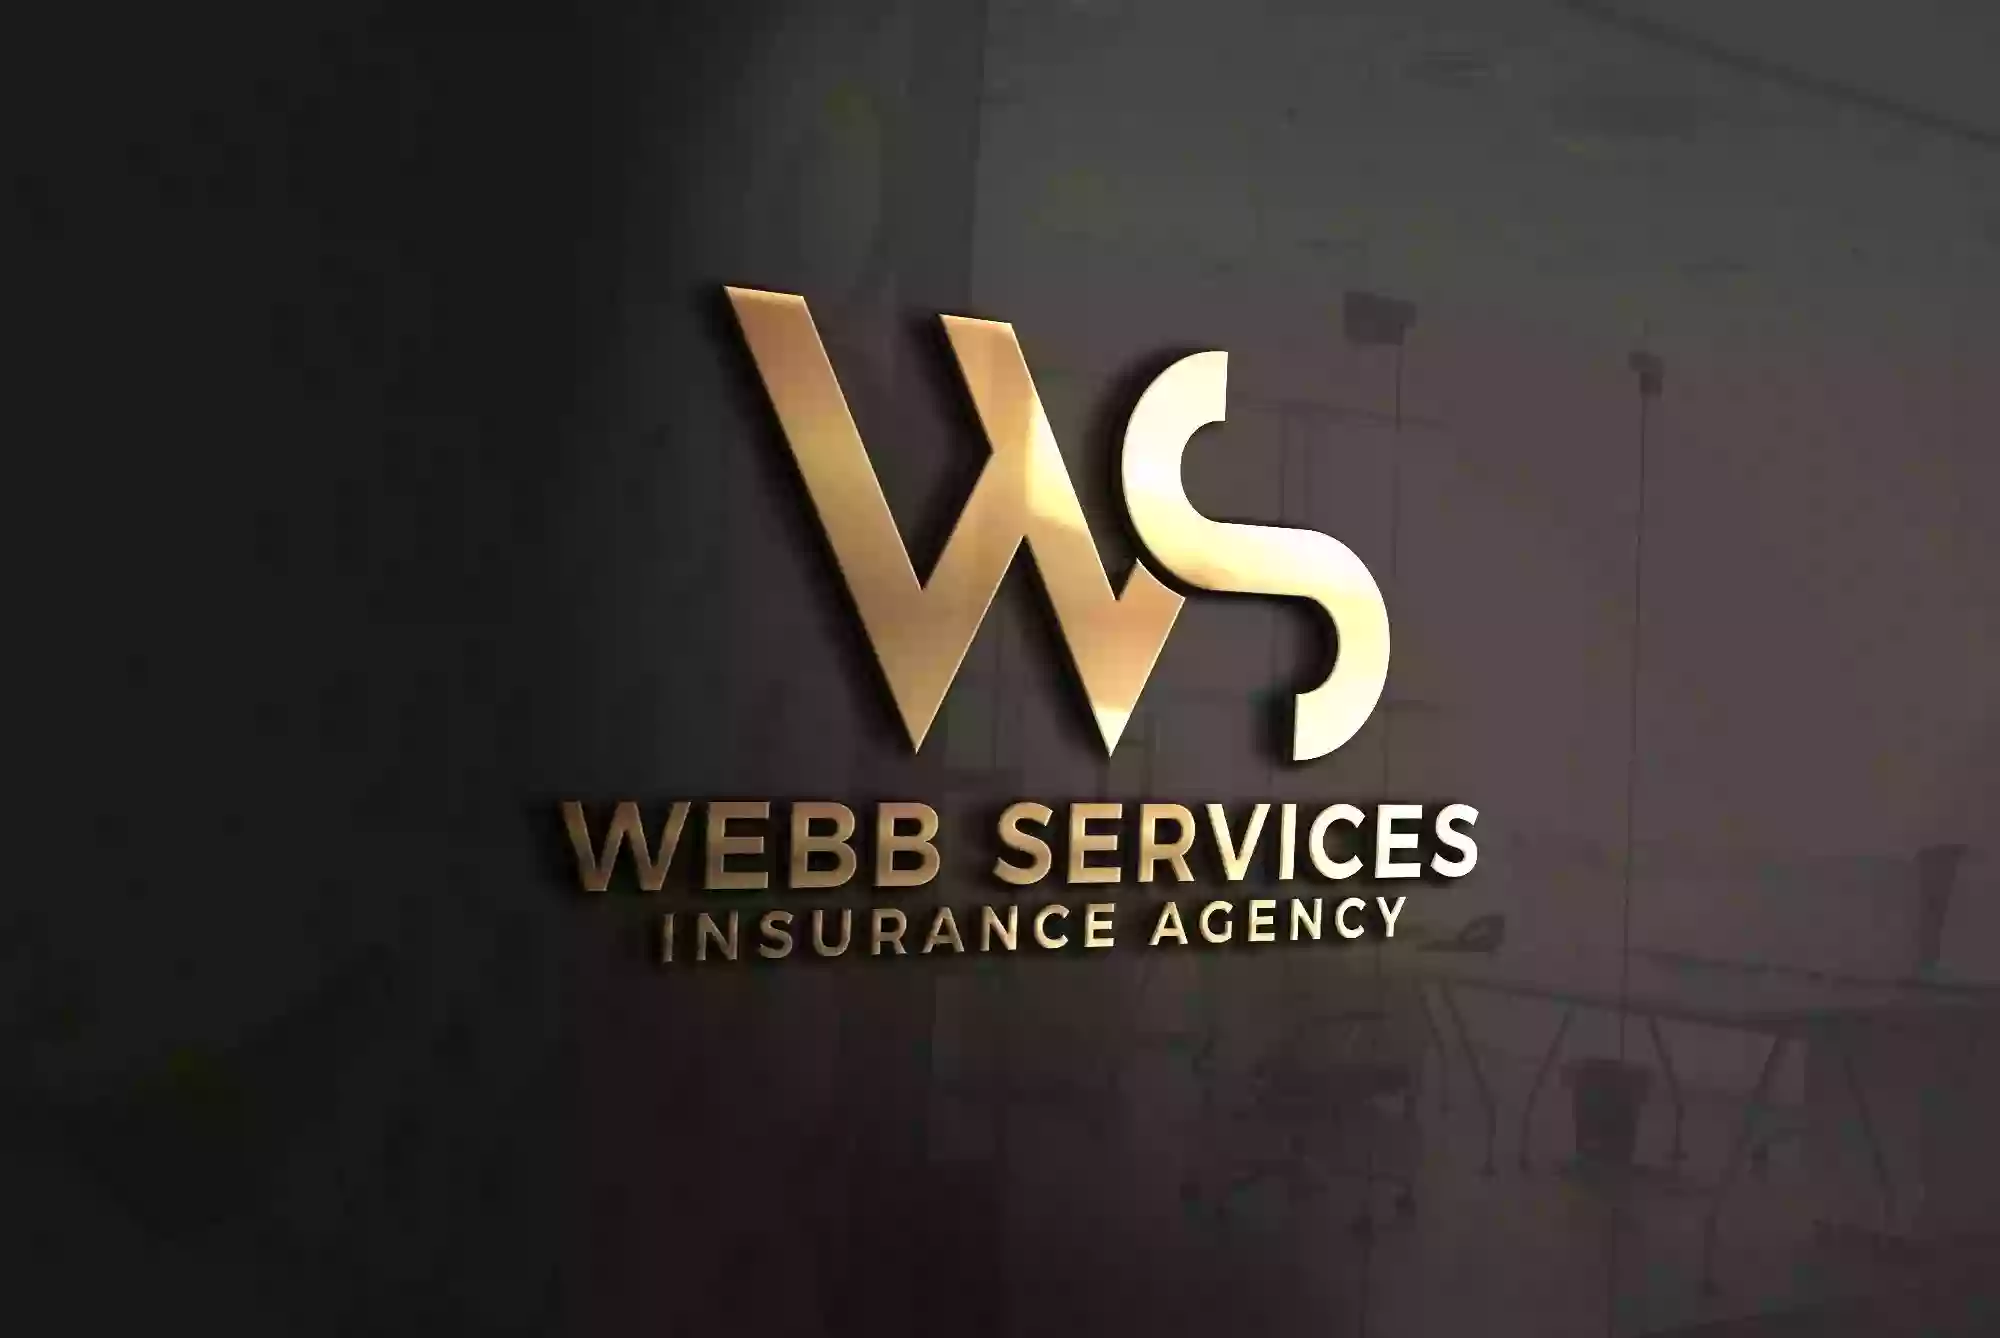 Webb Services Insurance Agency